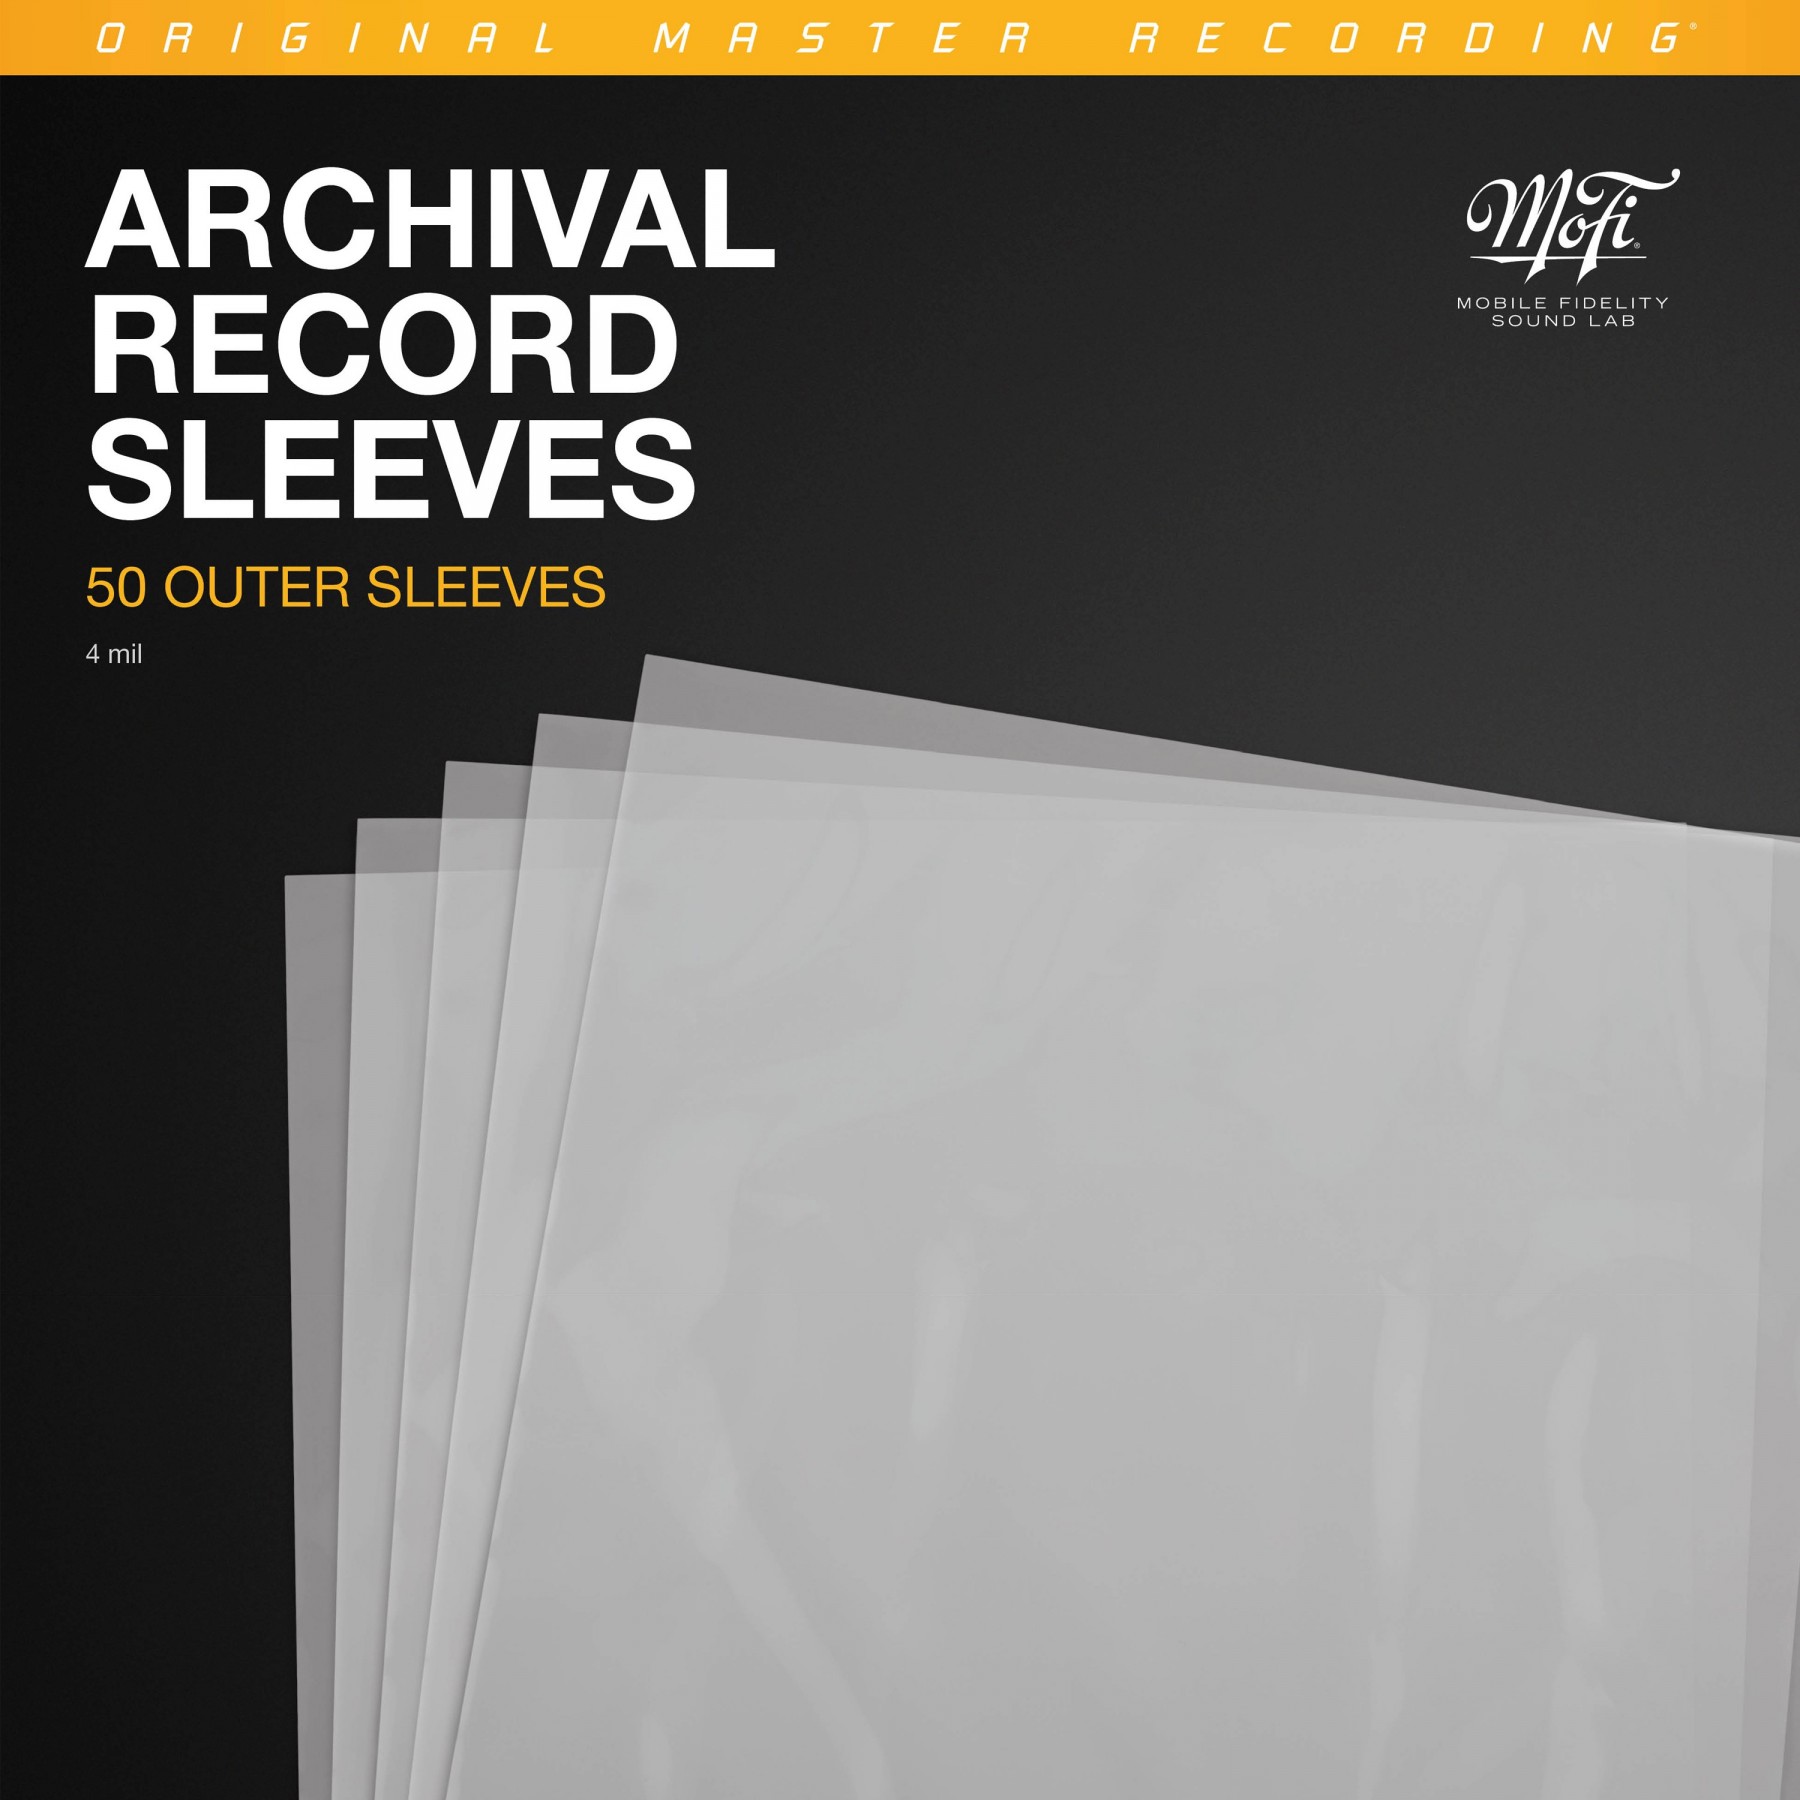 MFSL Archival Record Sleeves